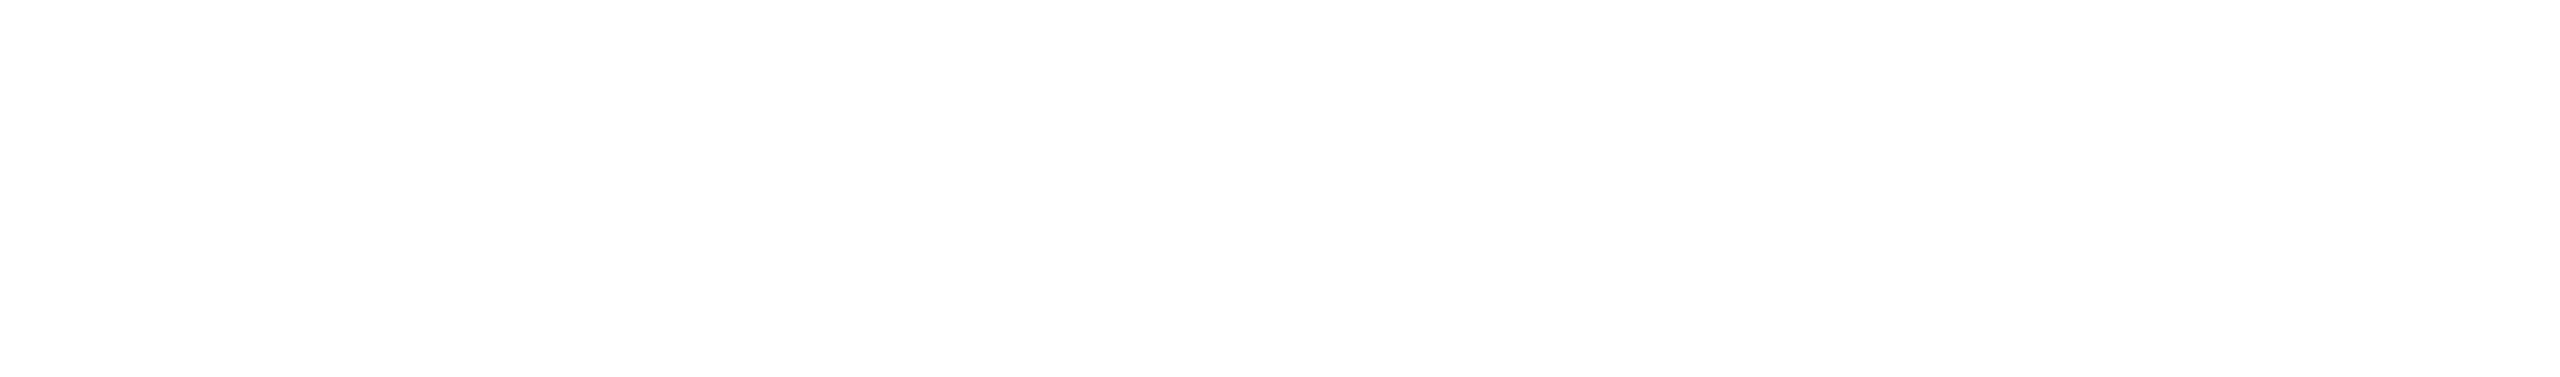 cambridge audio